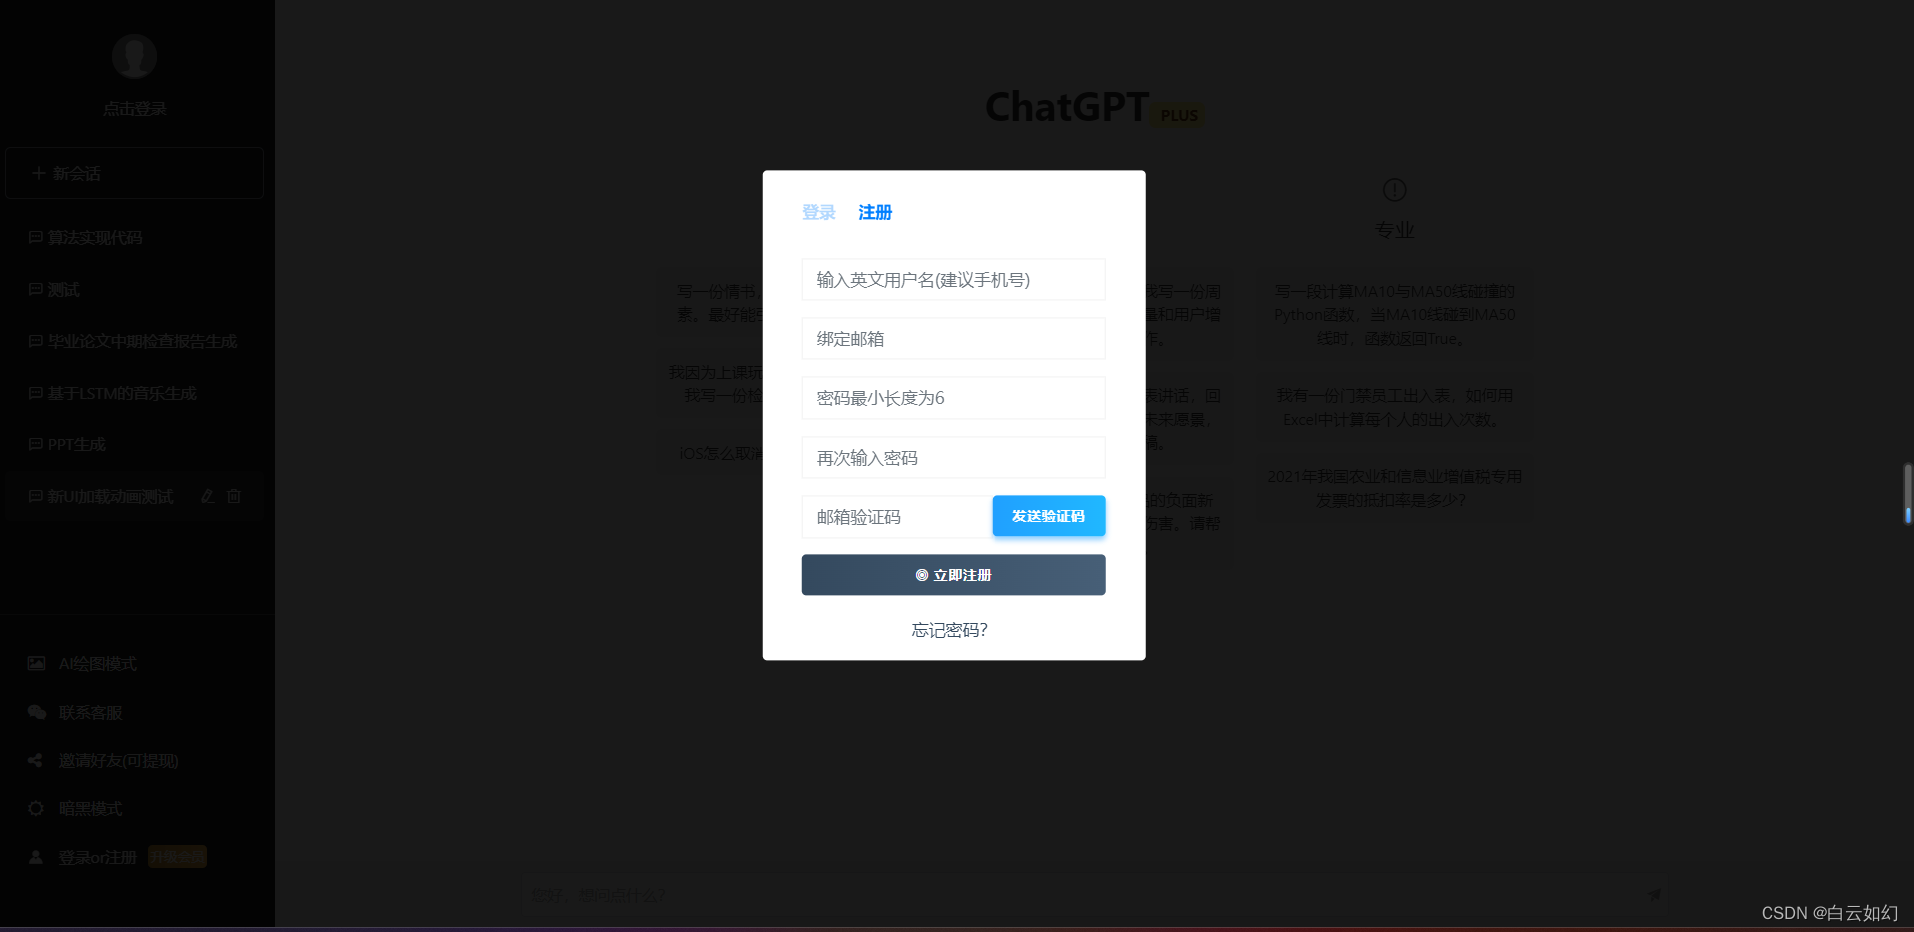 ChatGPT商业网站源码